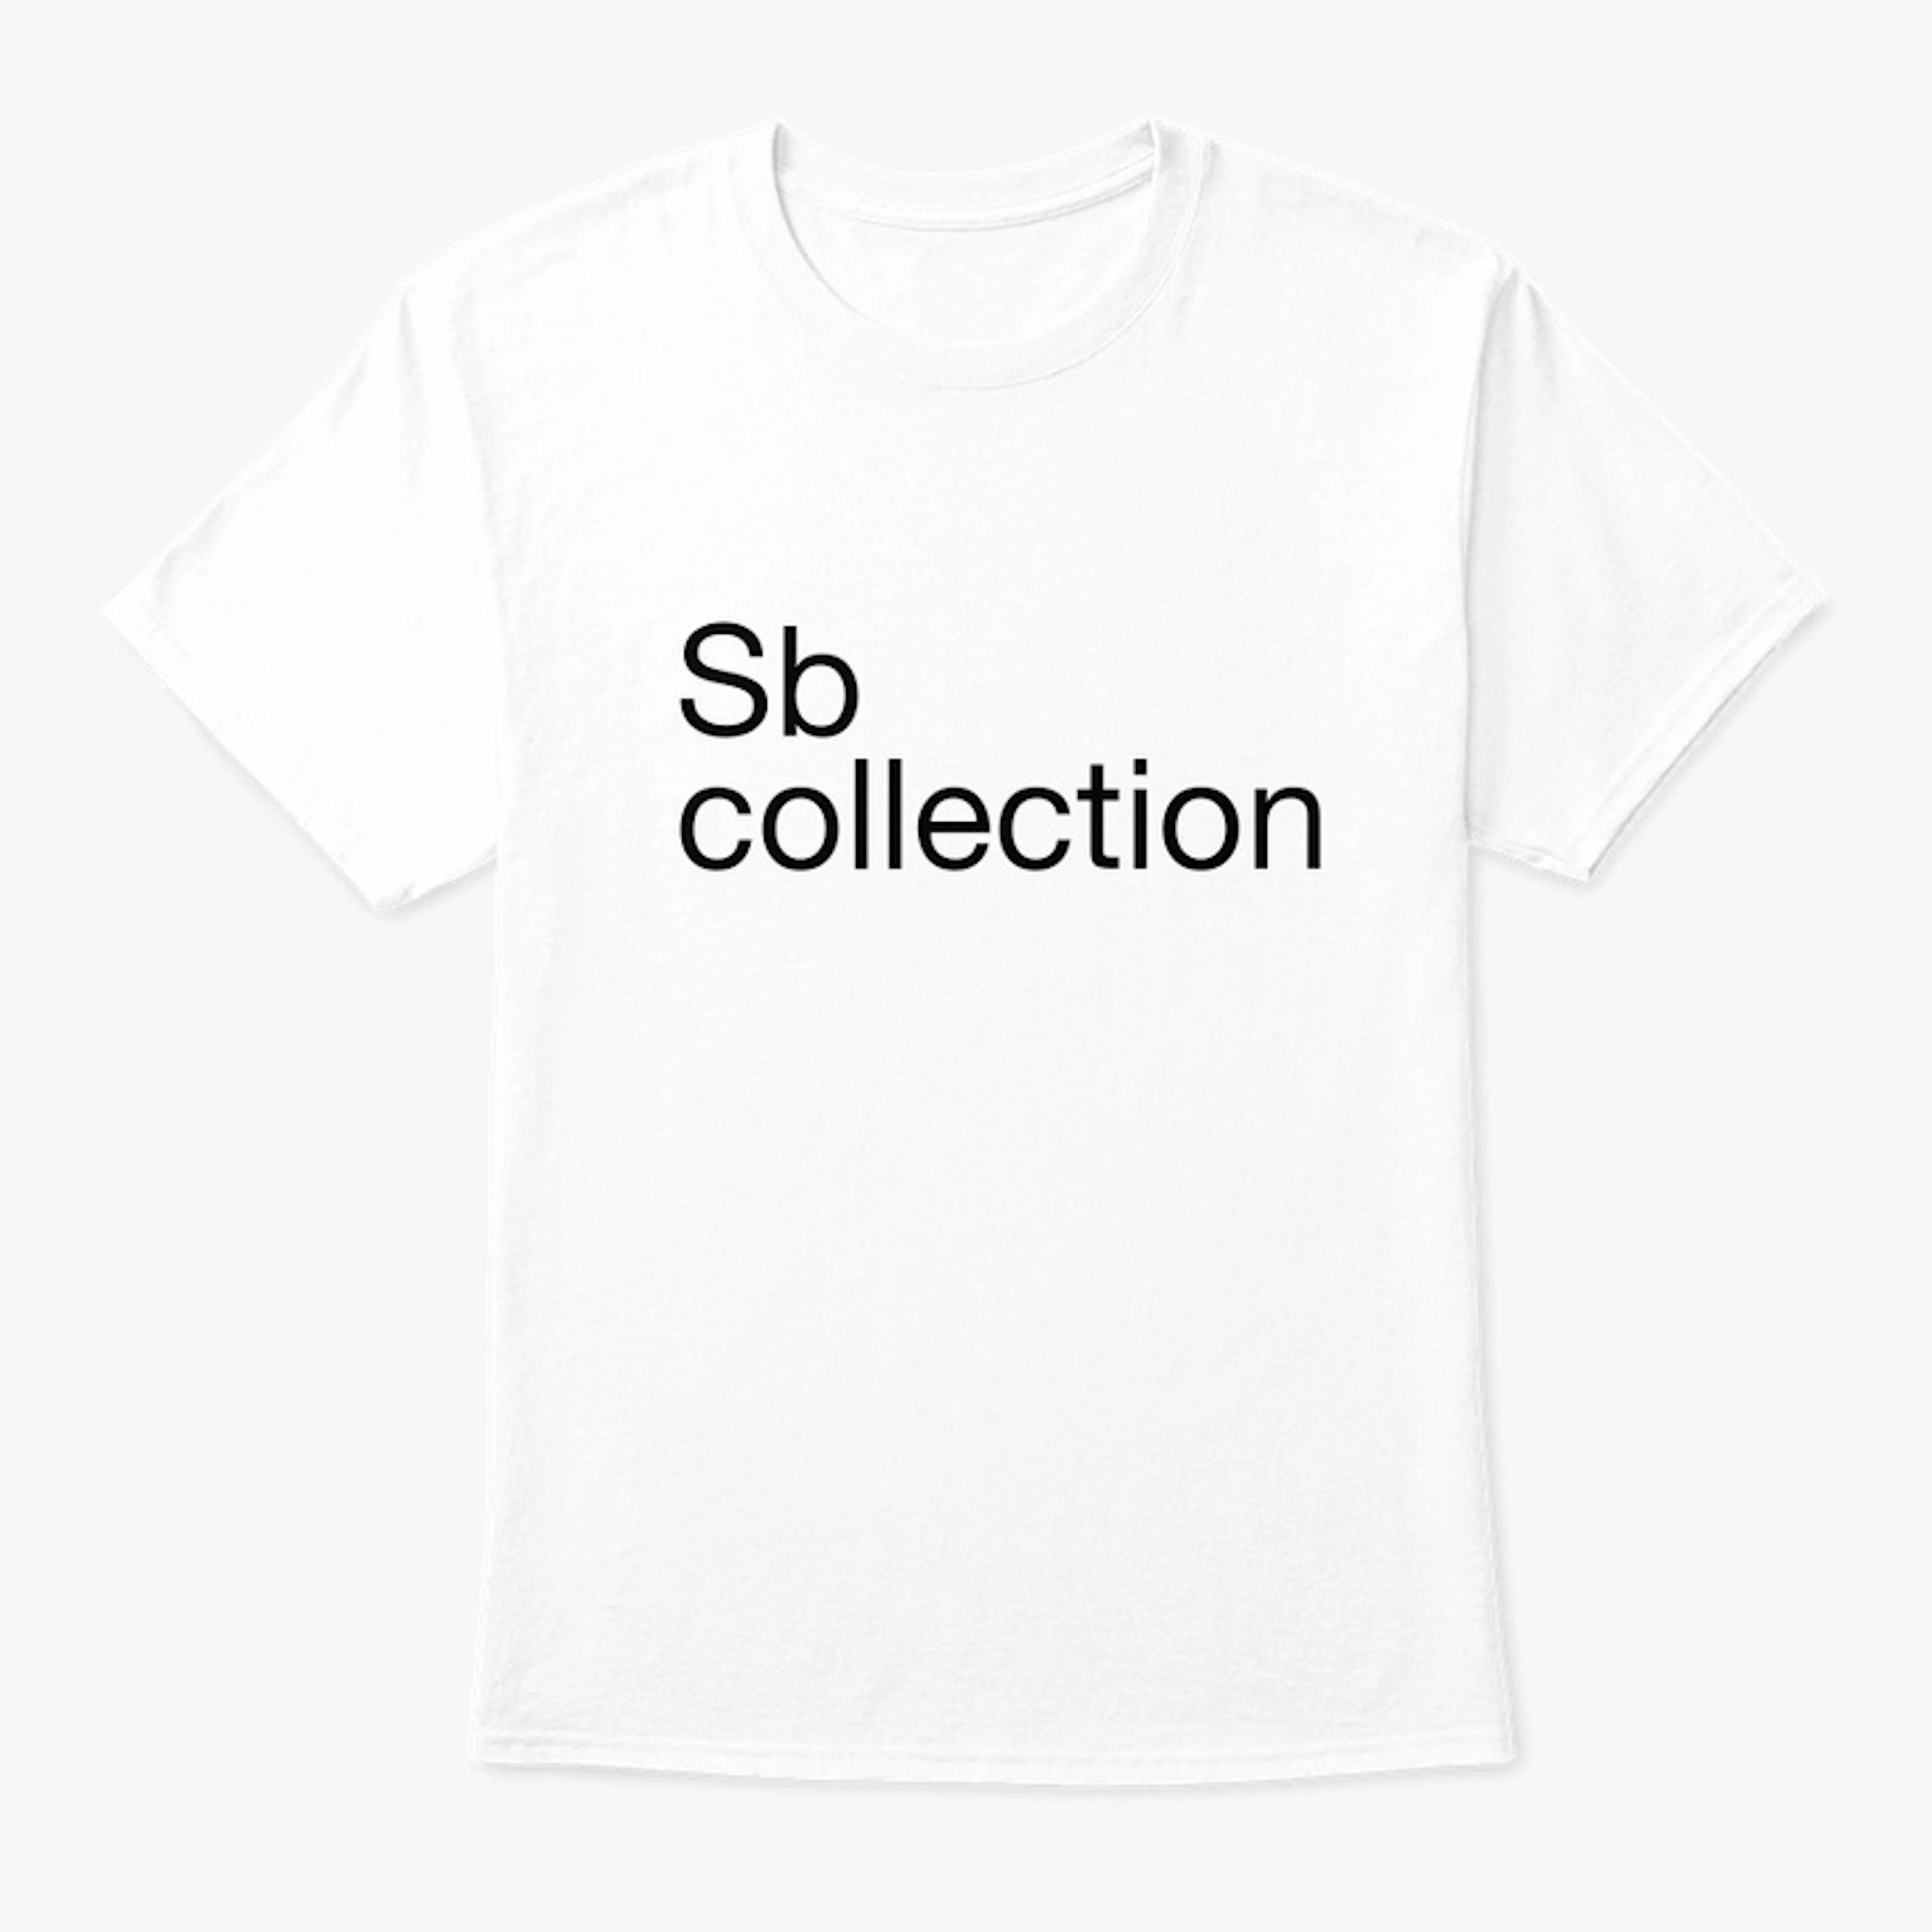 Sb collection 